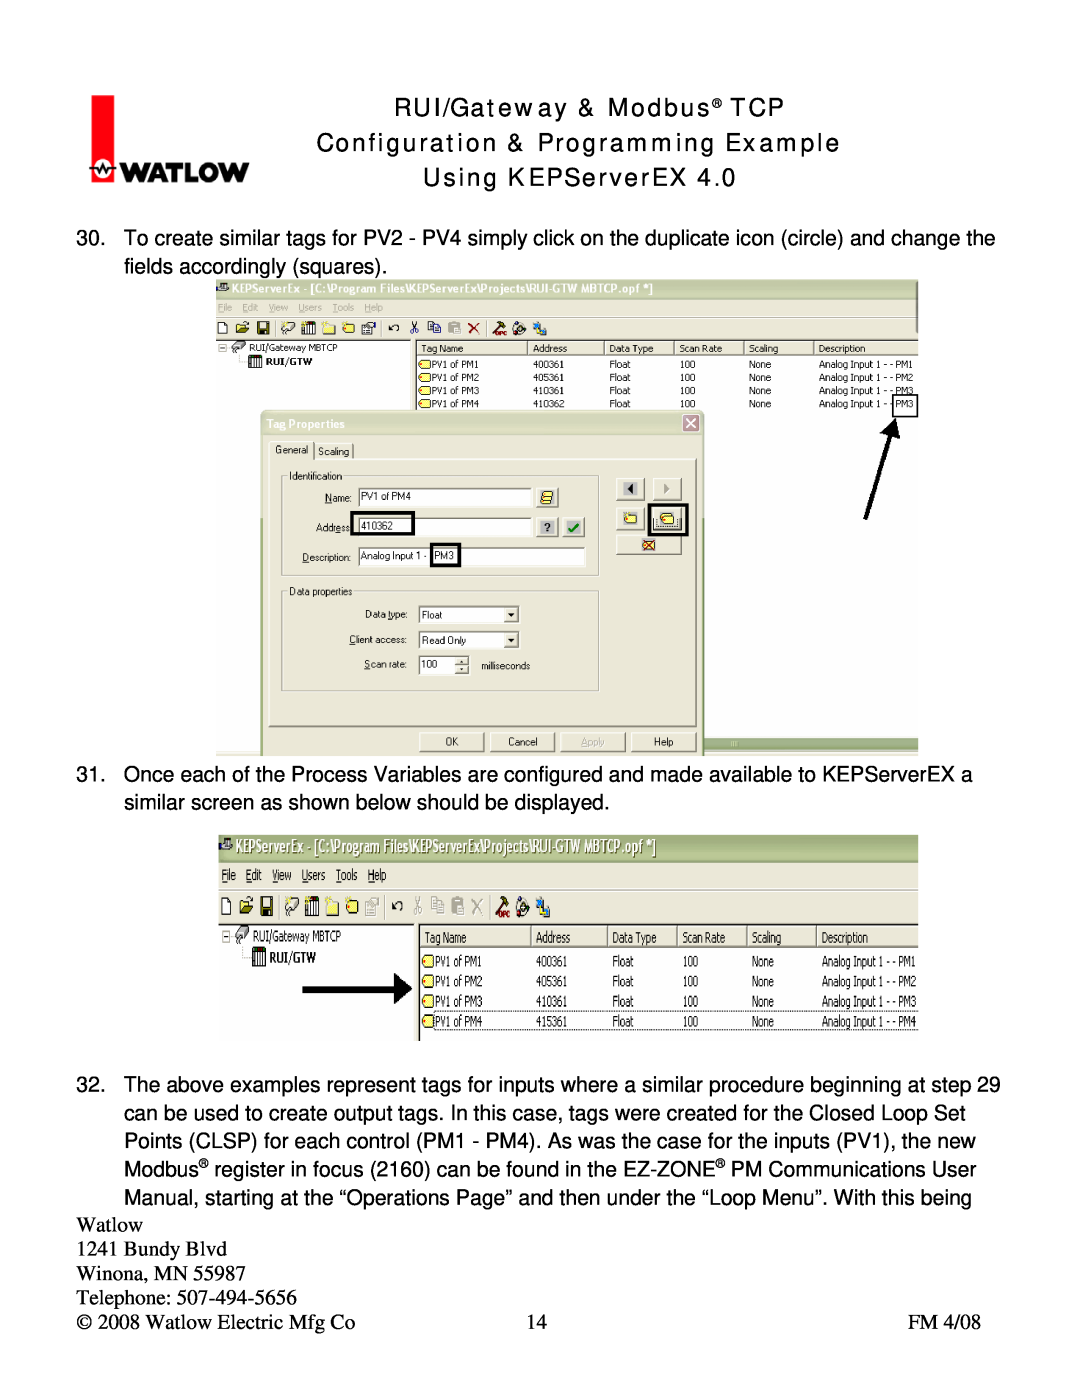 Watlow Electric user manual RUI/Gateway & Modbus TCP Configuration & Programming Example, Using KEPServerEX 